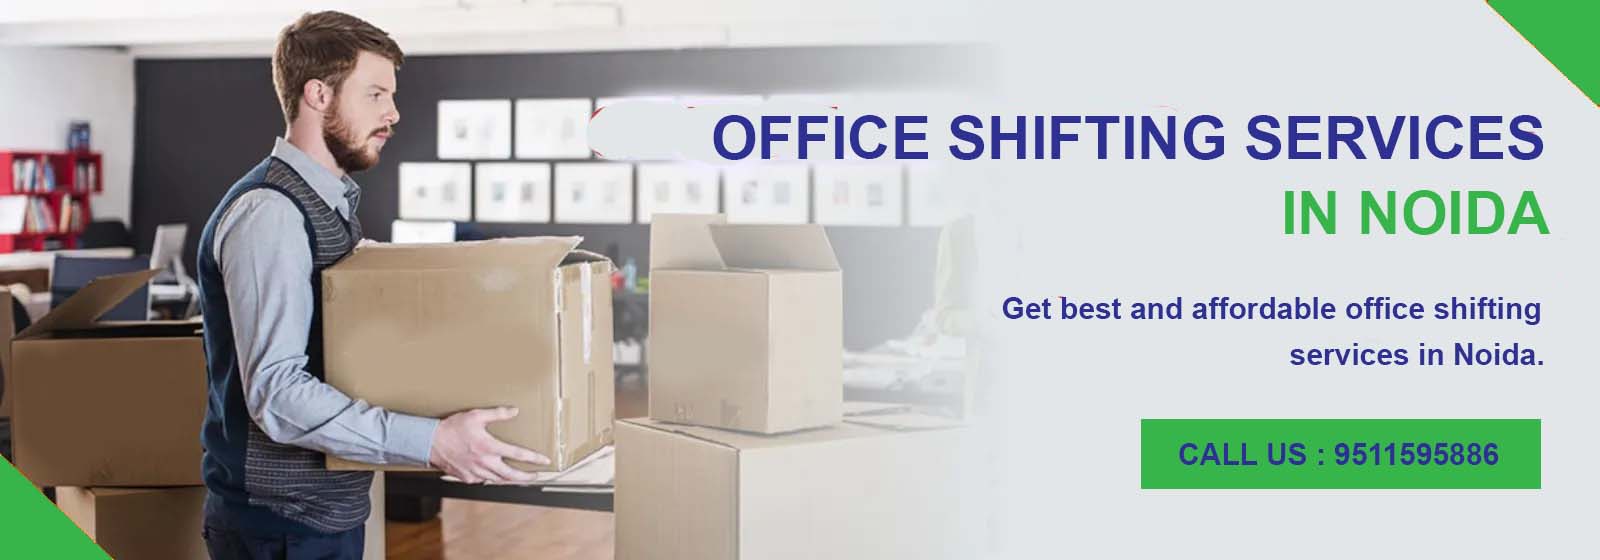 Office Shifting Service Noida